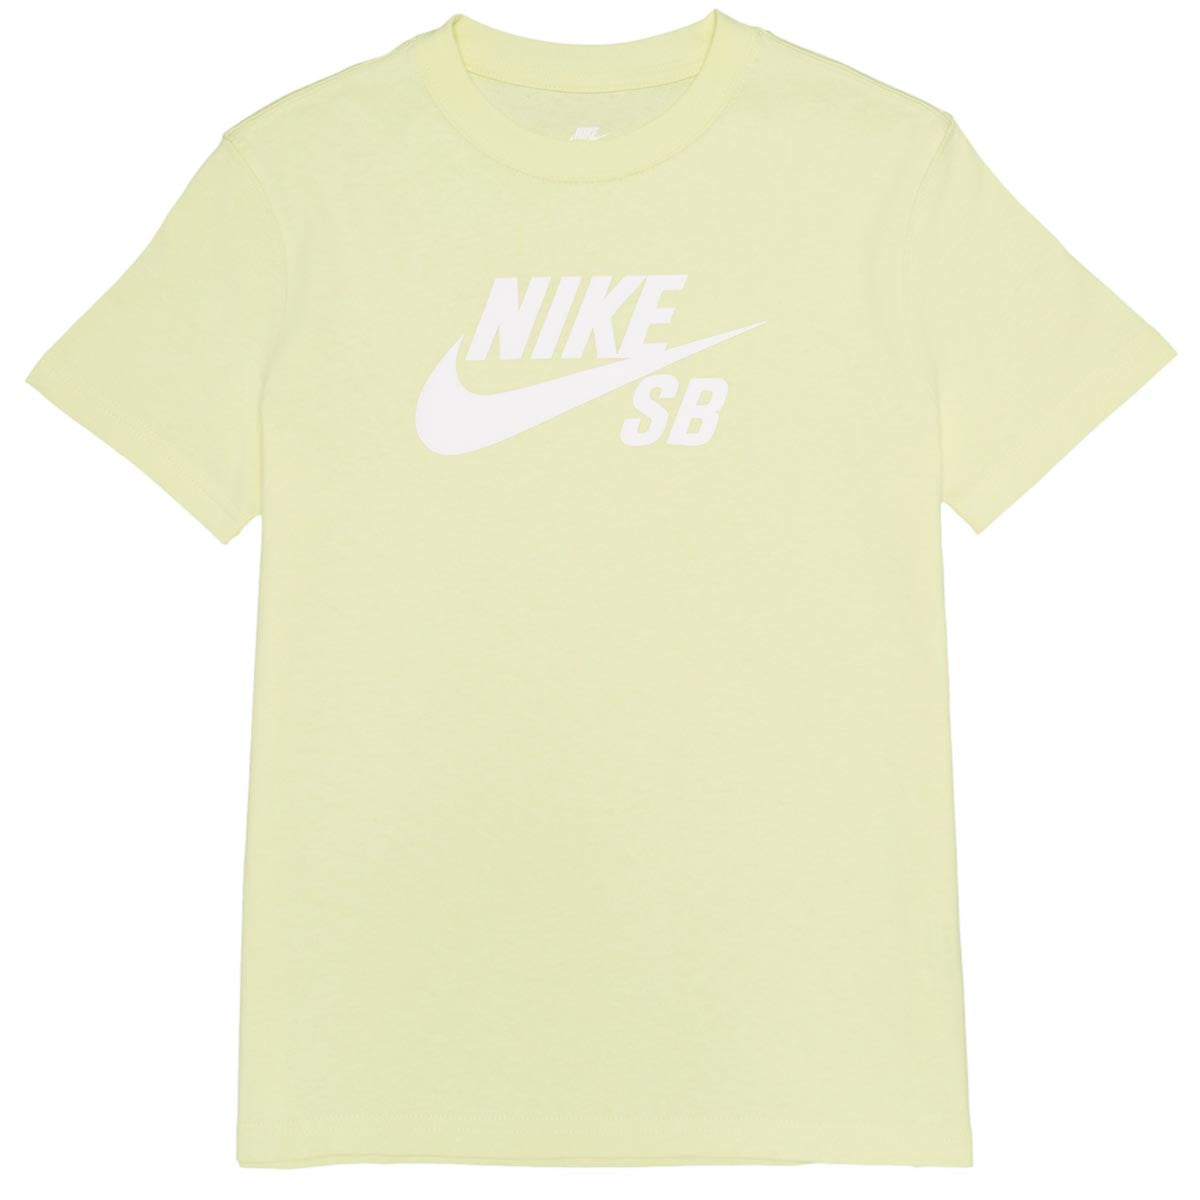 Nike SB Youth Icon T-Shirt - Luminous Green image 1